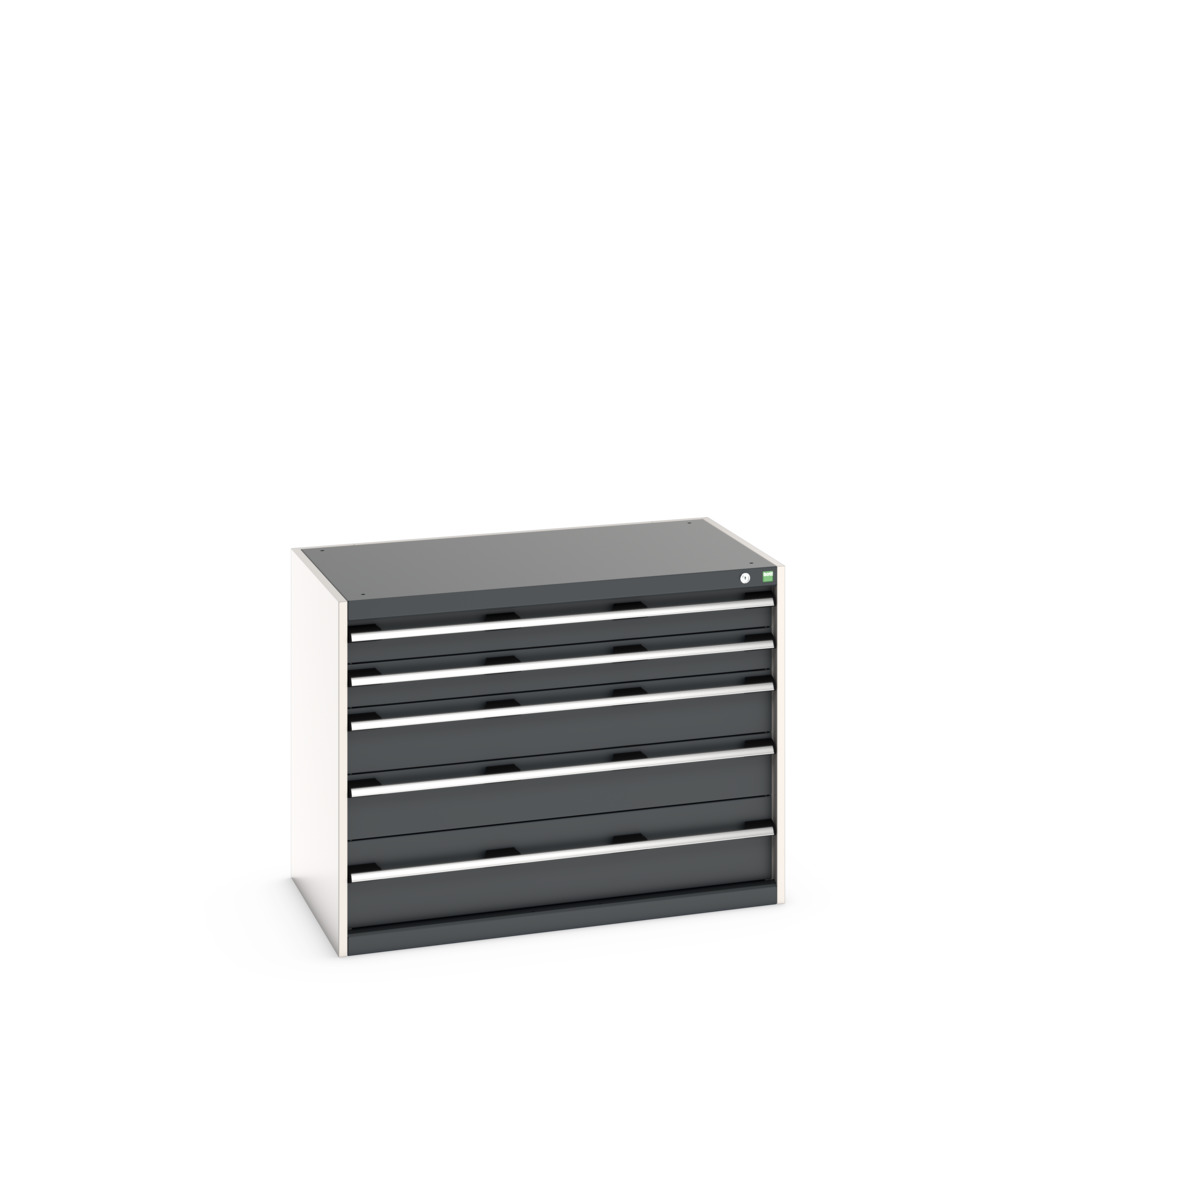 40021009. - cubio drawer cabinet